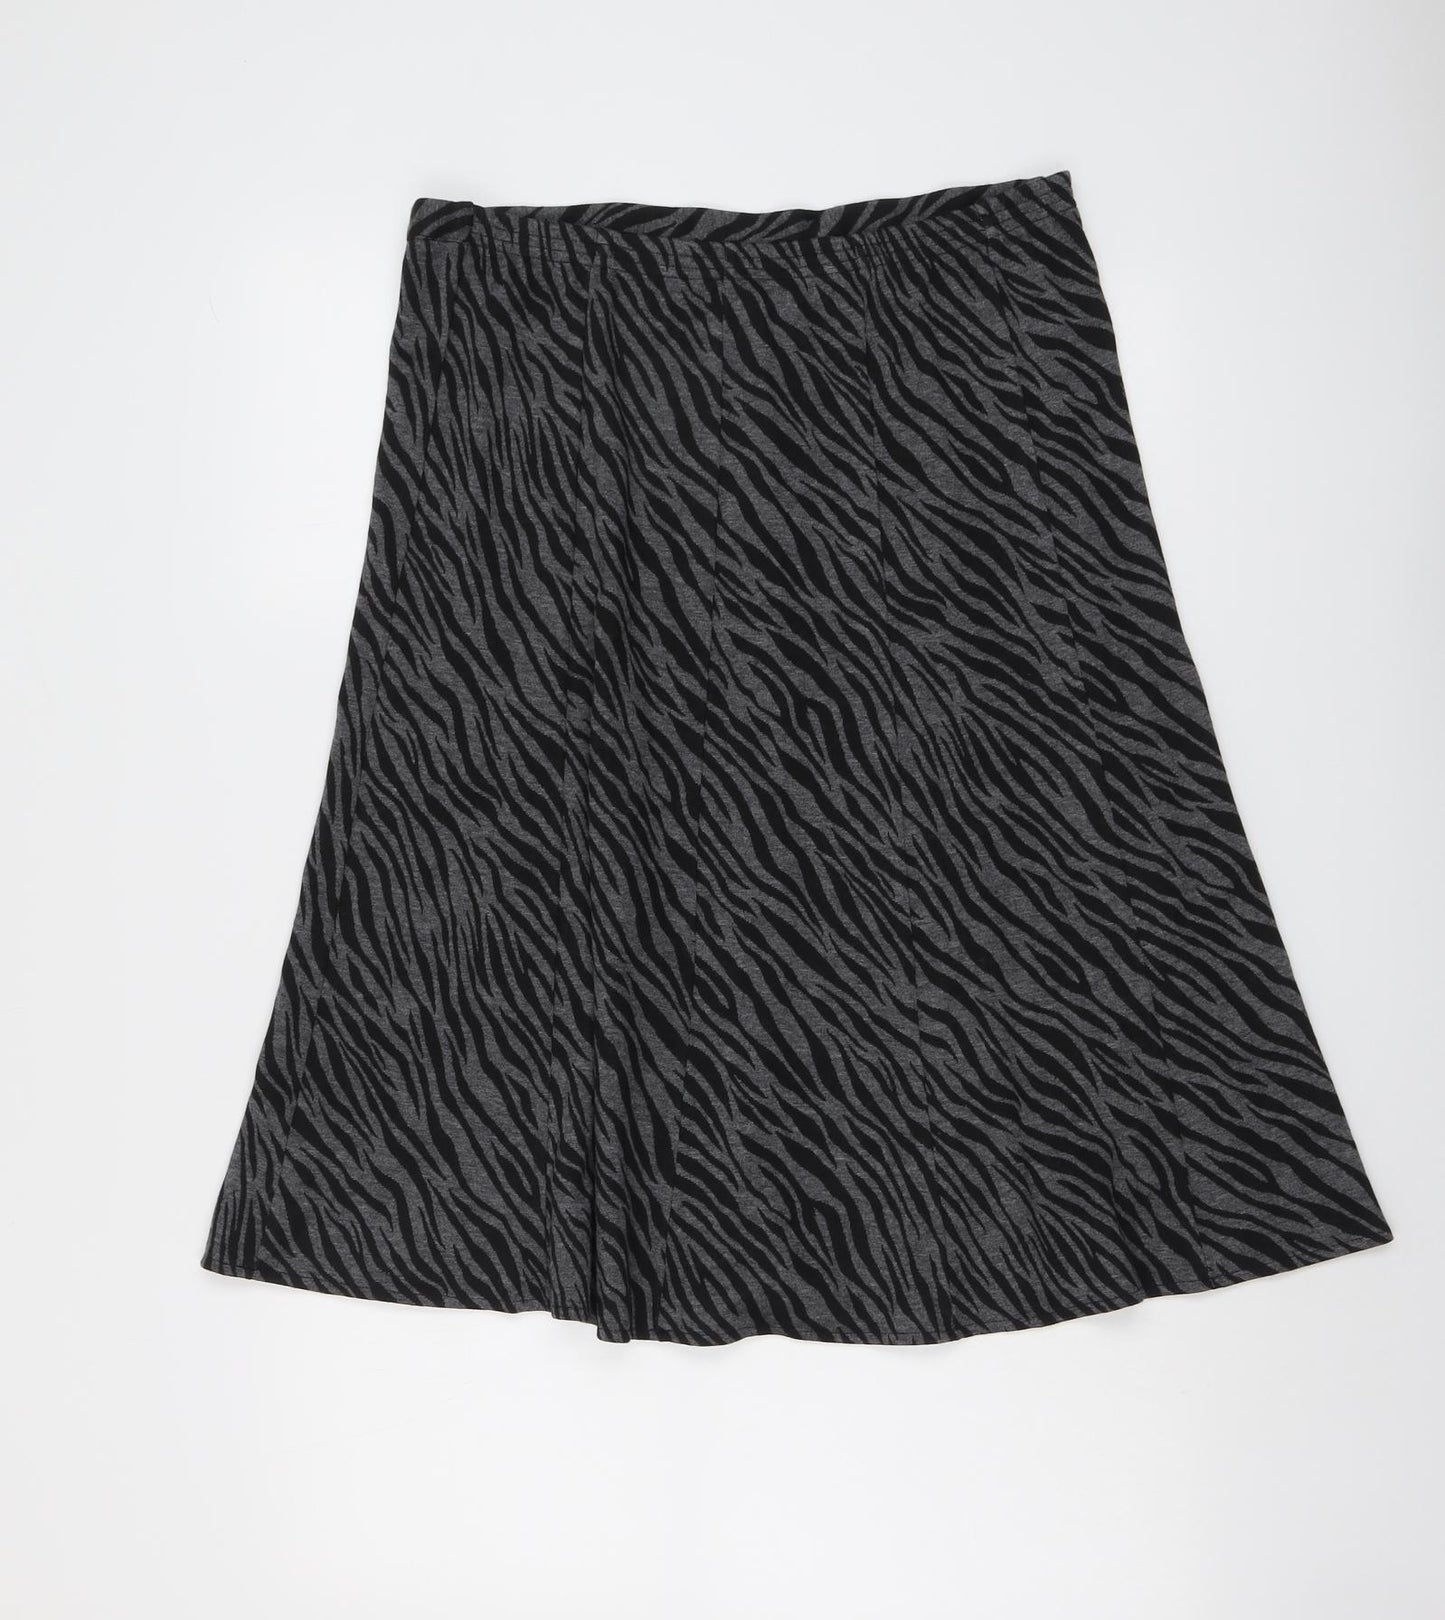 Bonmarché Womens Grey Animal Print Polyester A-Line Skirt Size 12 - Tiger print